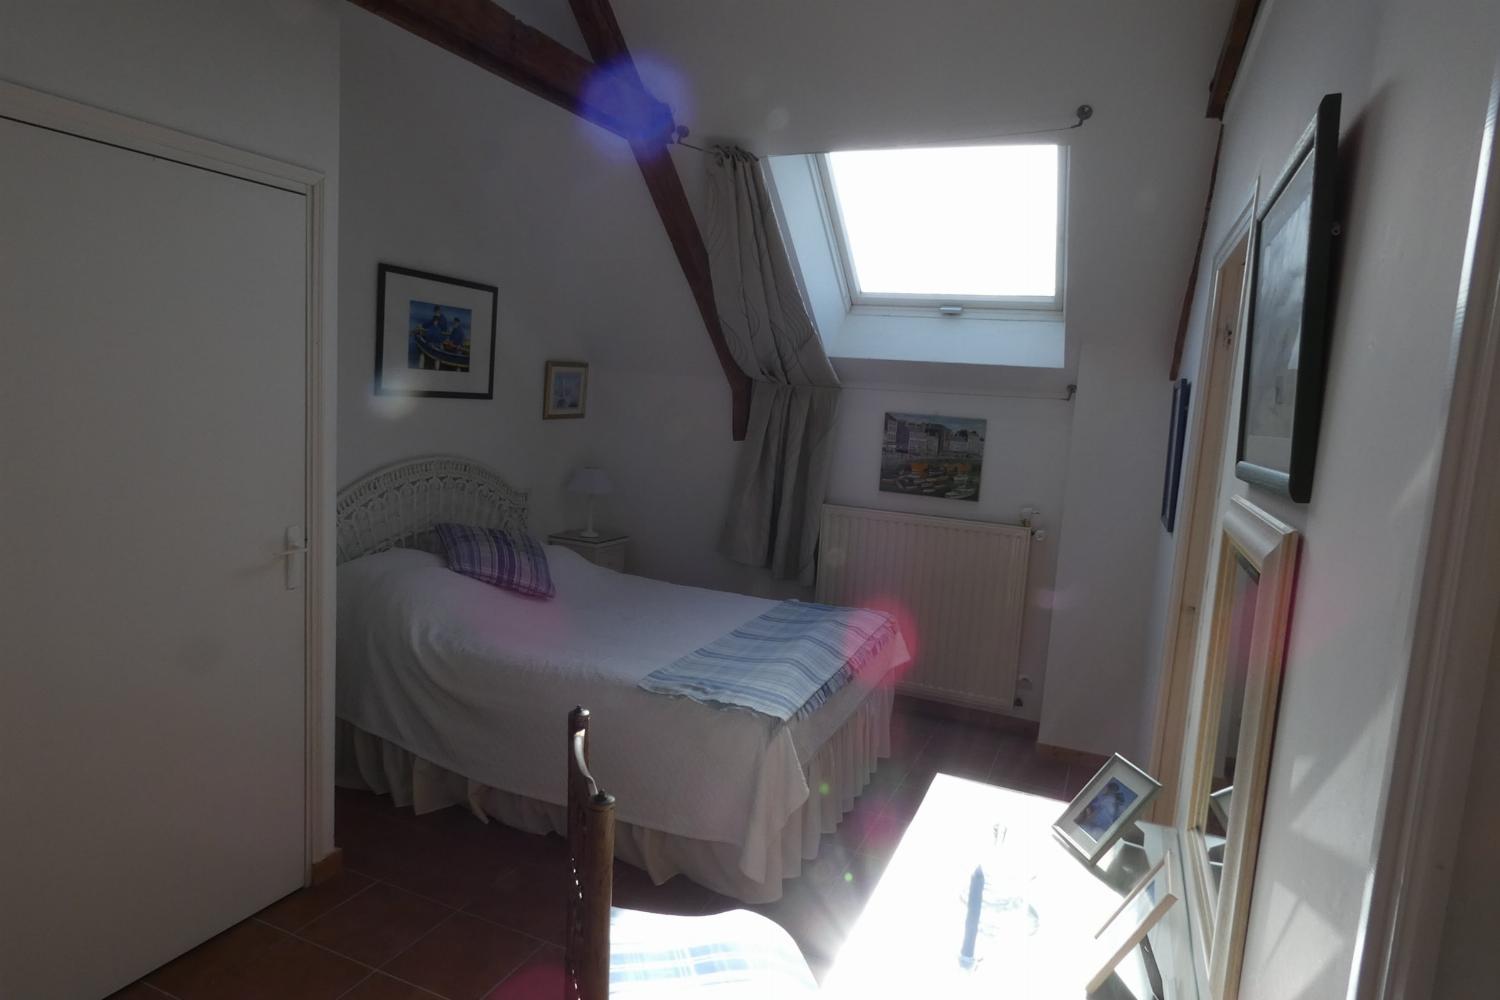 Bedroom | Rental cottage in Brittany